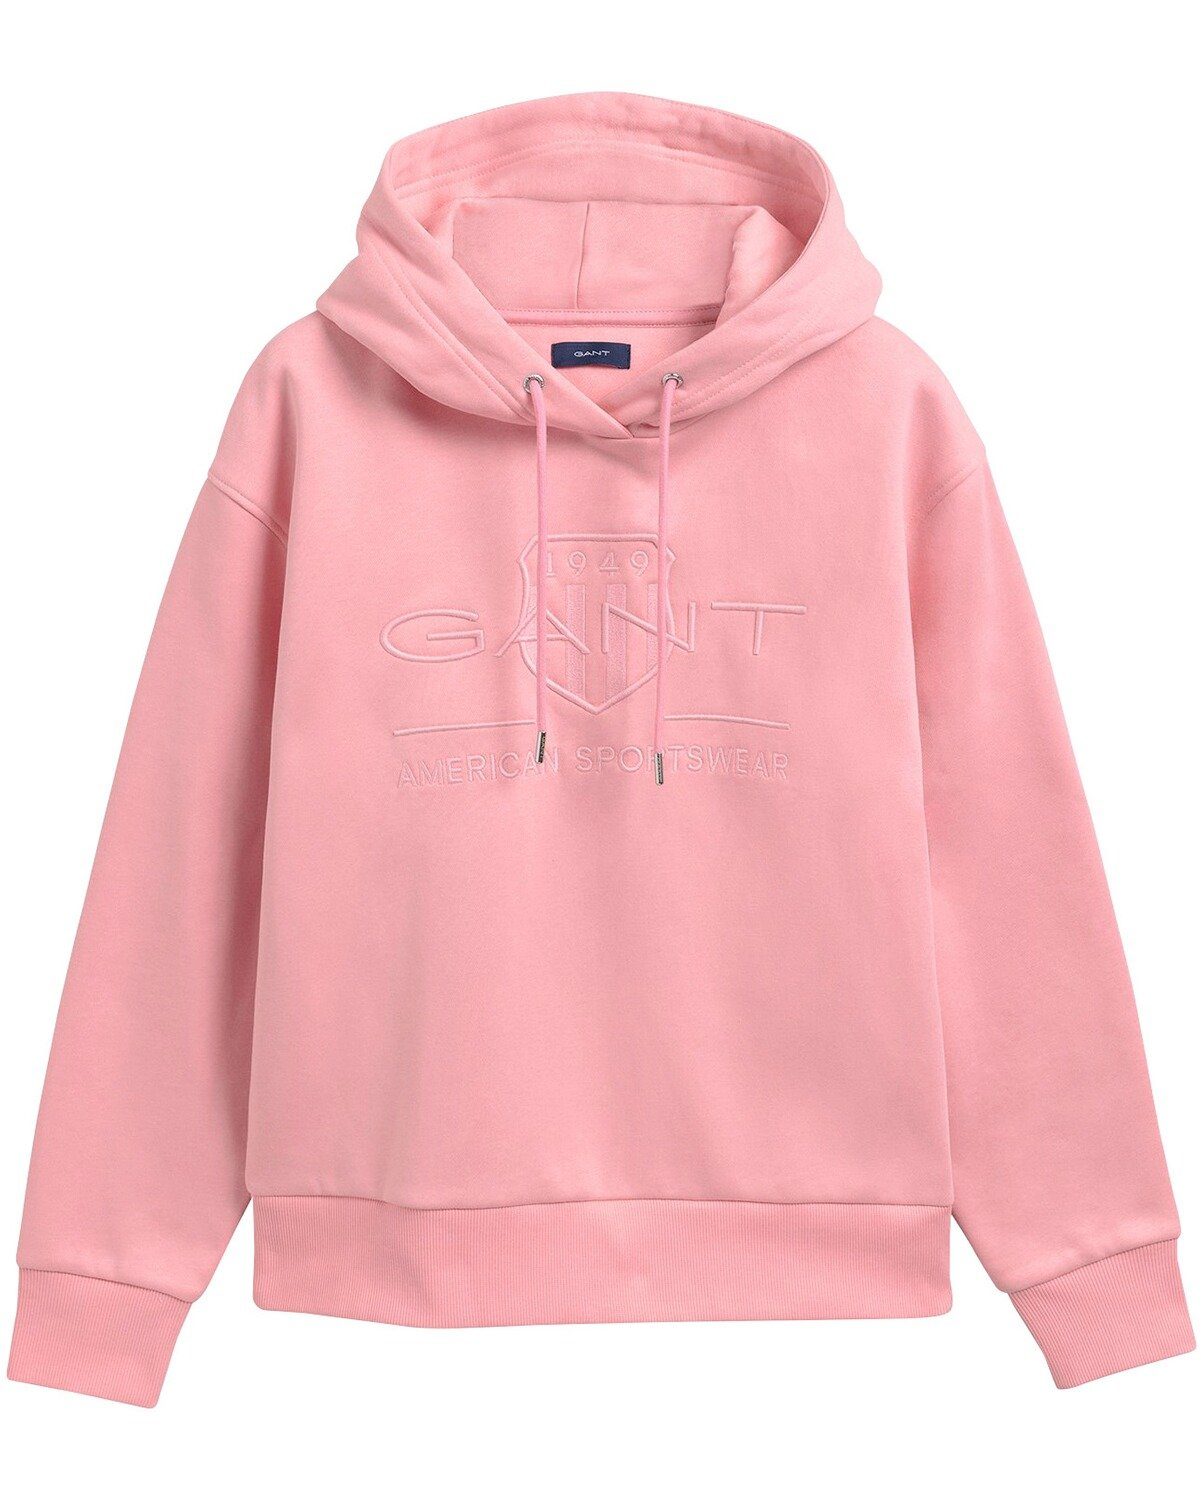 Gant Sweatshirt Hoodie Tonal Archive Shield Geranium Pink